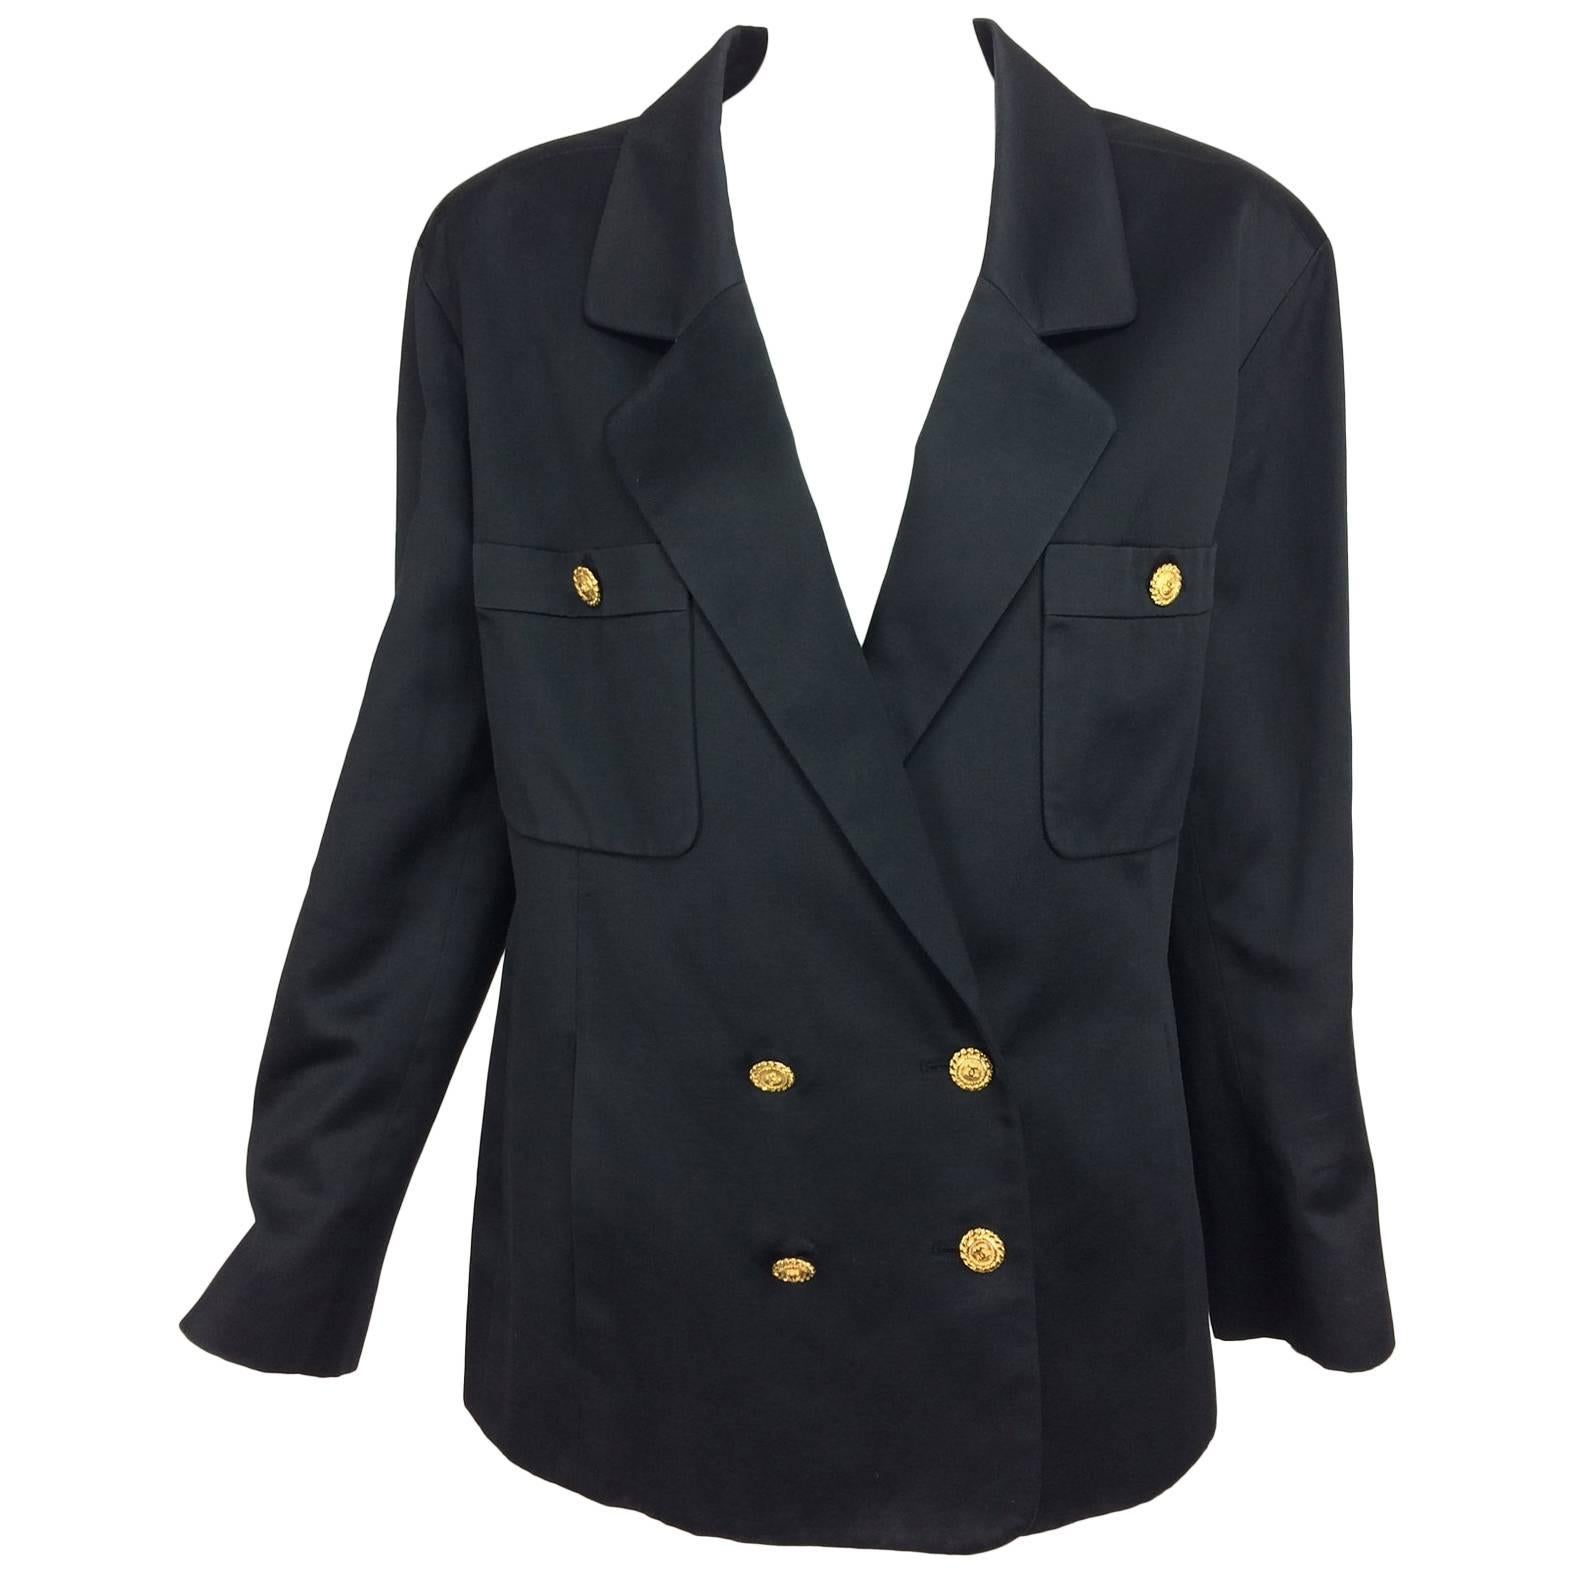 Vintage Chanel black silk double breasted pea coat jacket 42